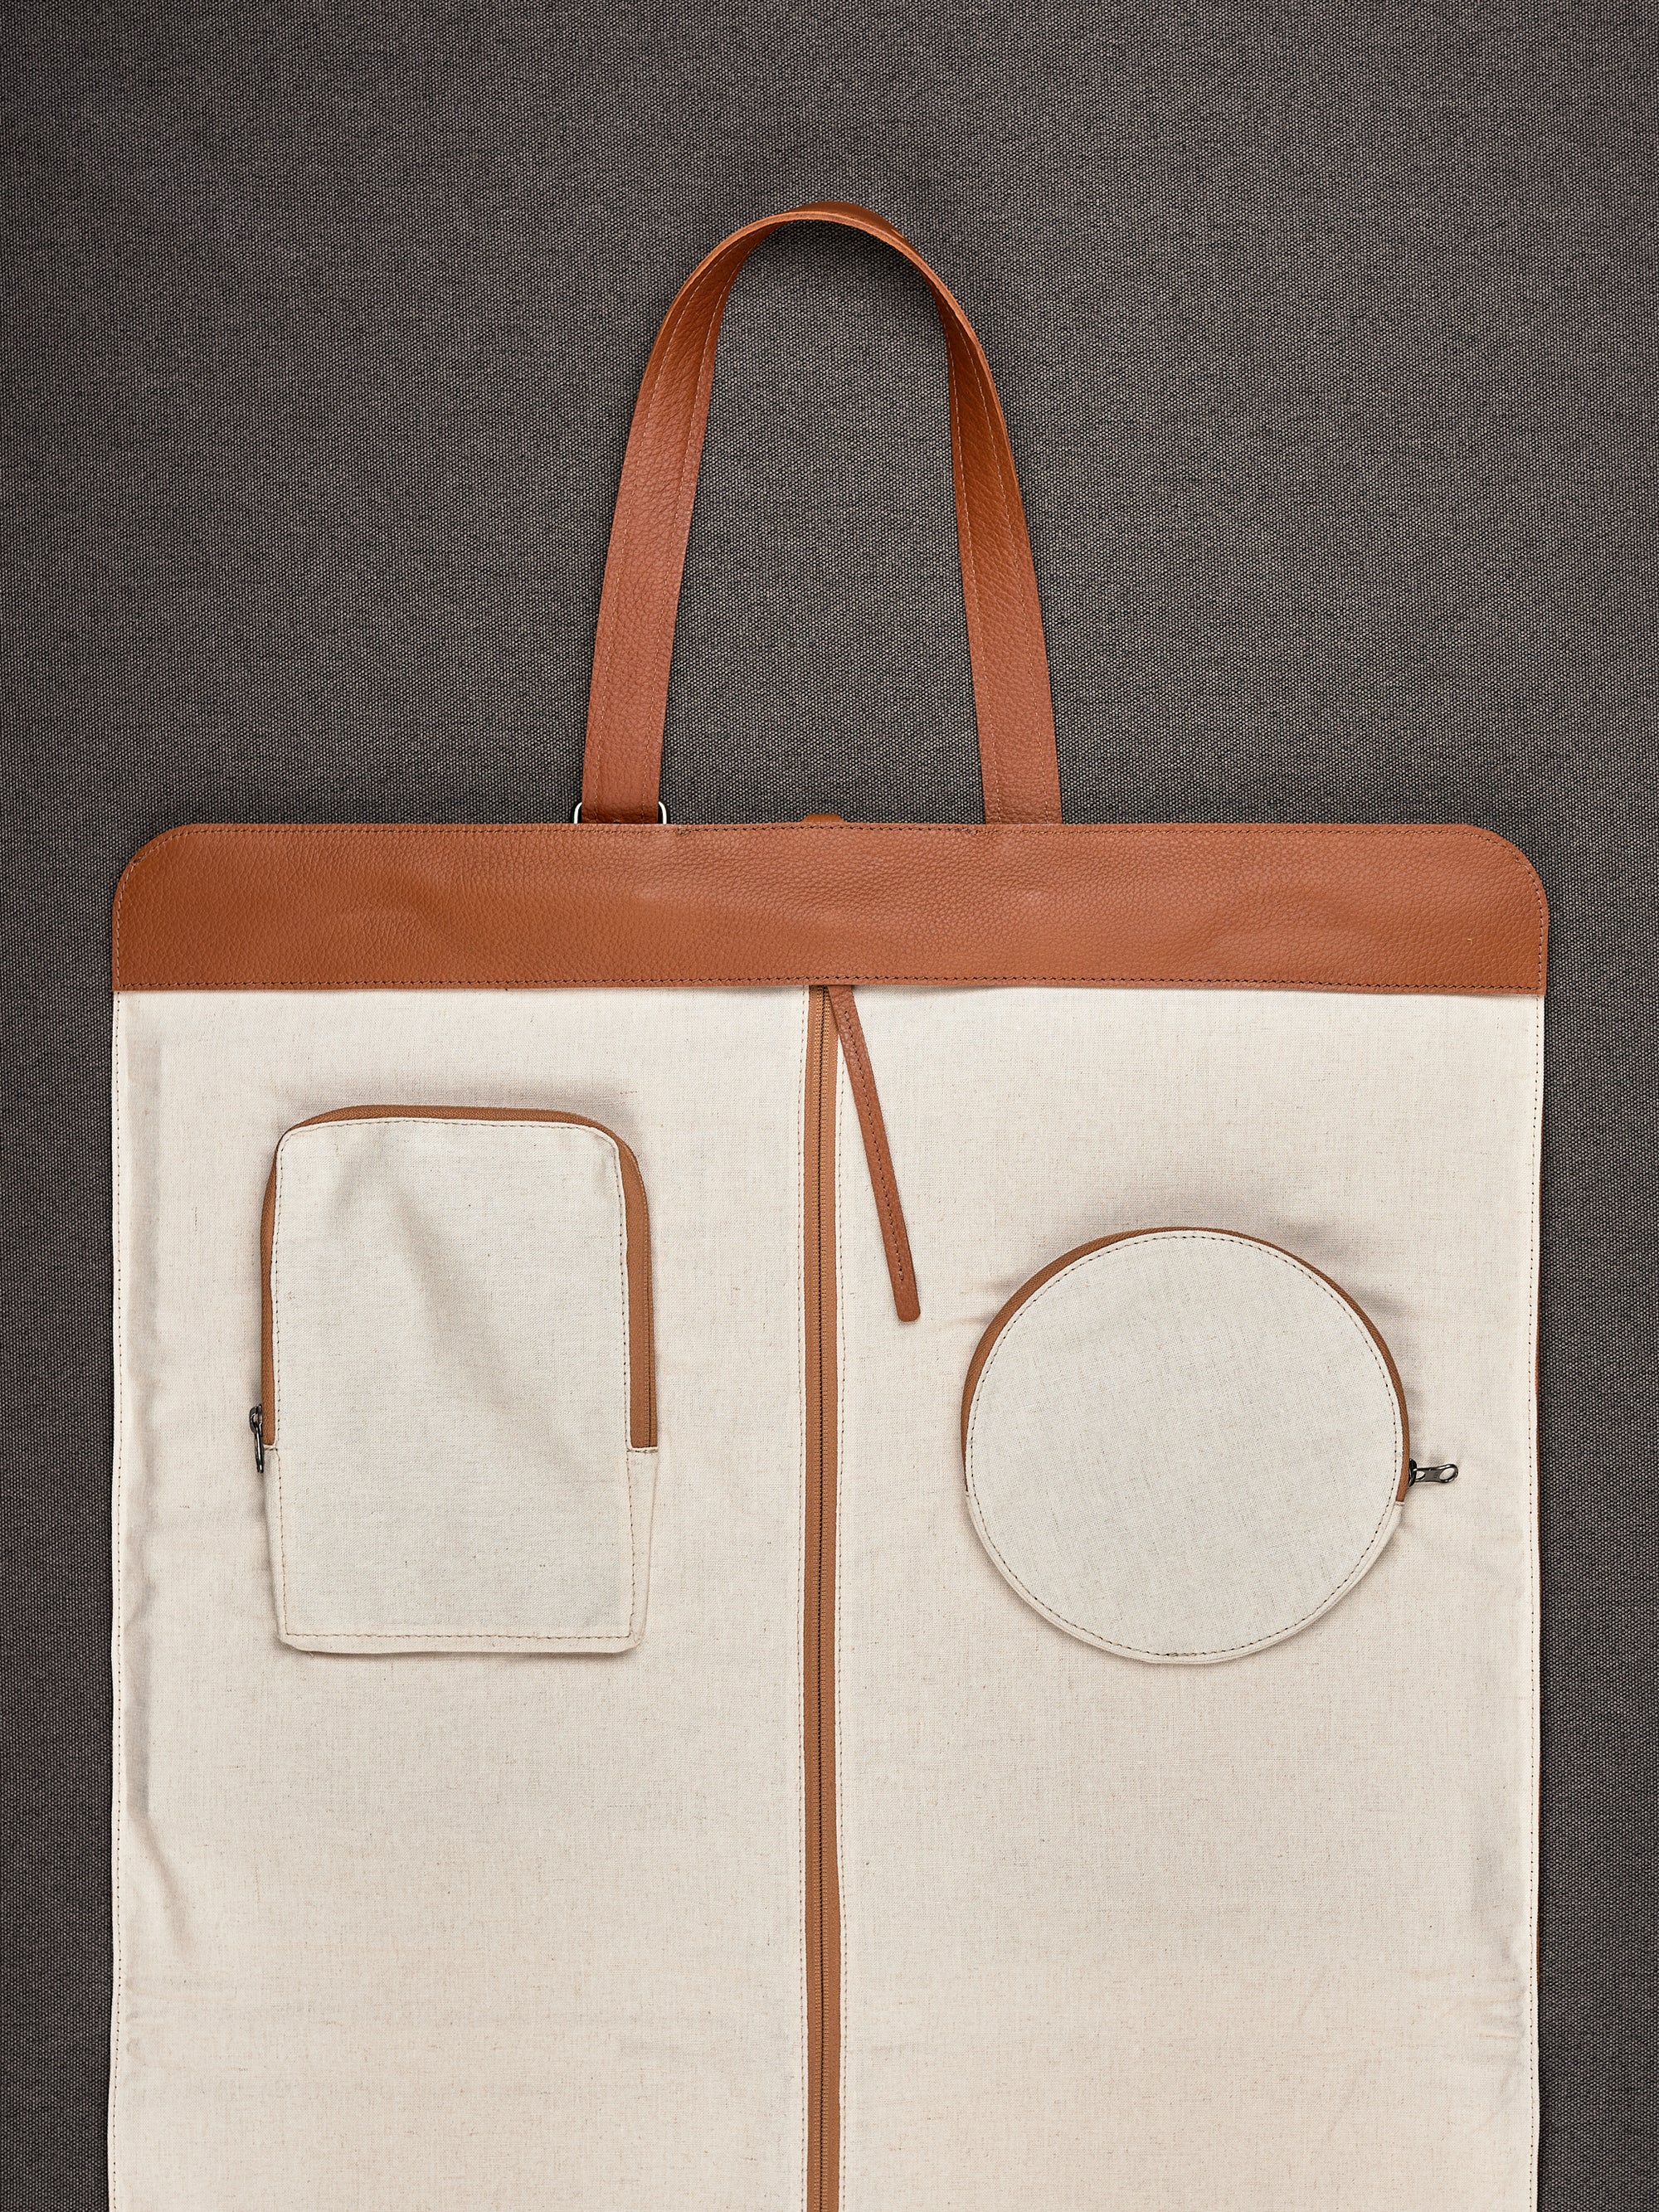 Leather Garment Bag Tan by Capra